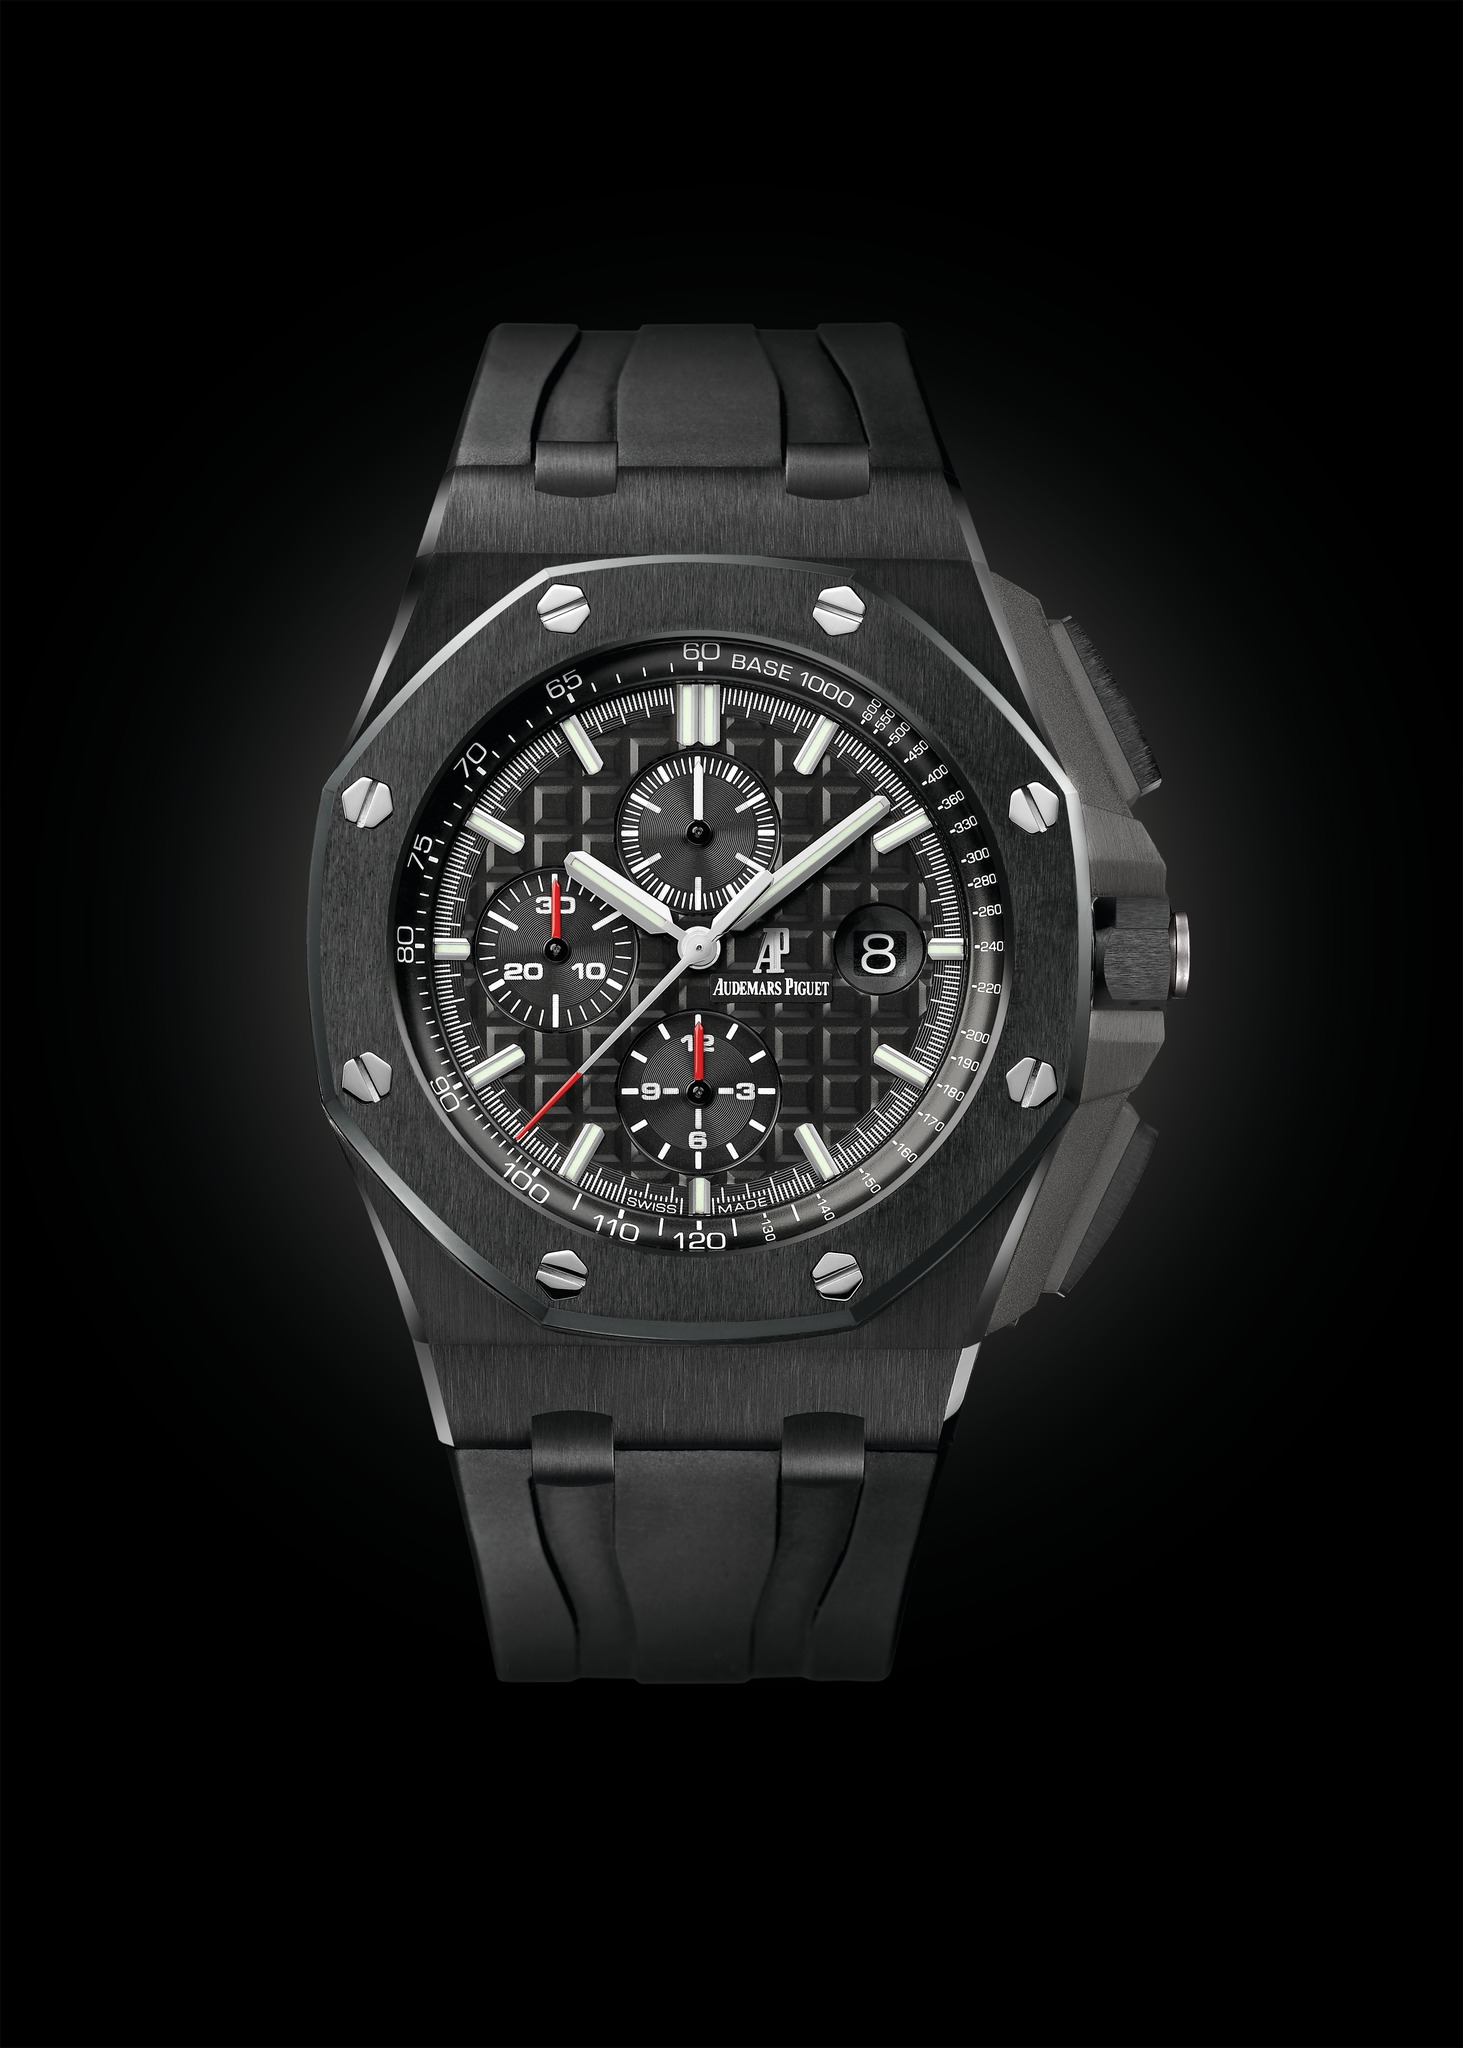 Audemars Piguet Royal Oak Offshore 44mm Black Ceramic watch REF: 26402CE.OO.A002CA.01